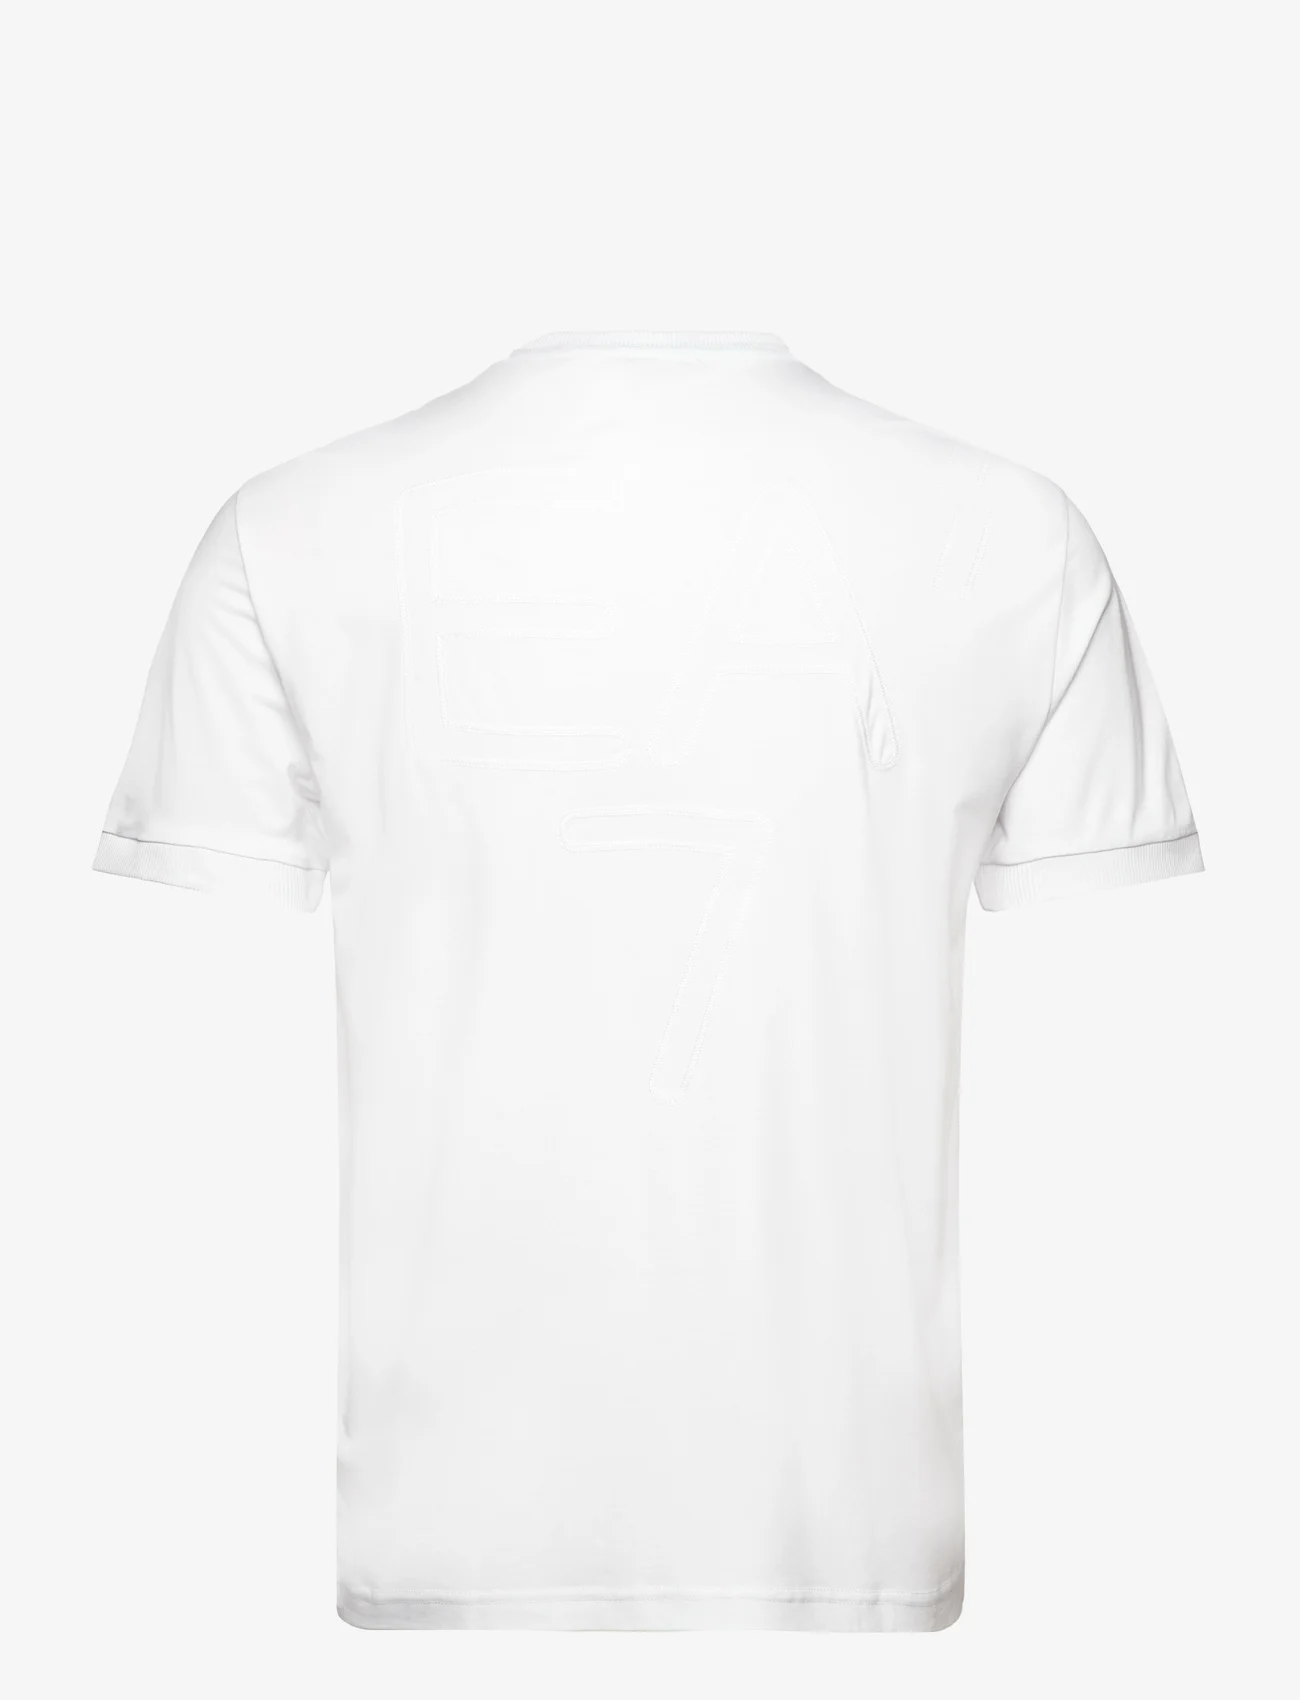 EA7 - T-SHIRT - t-shirts - white - 1